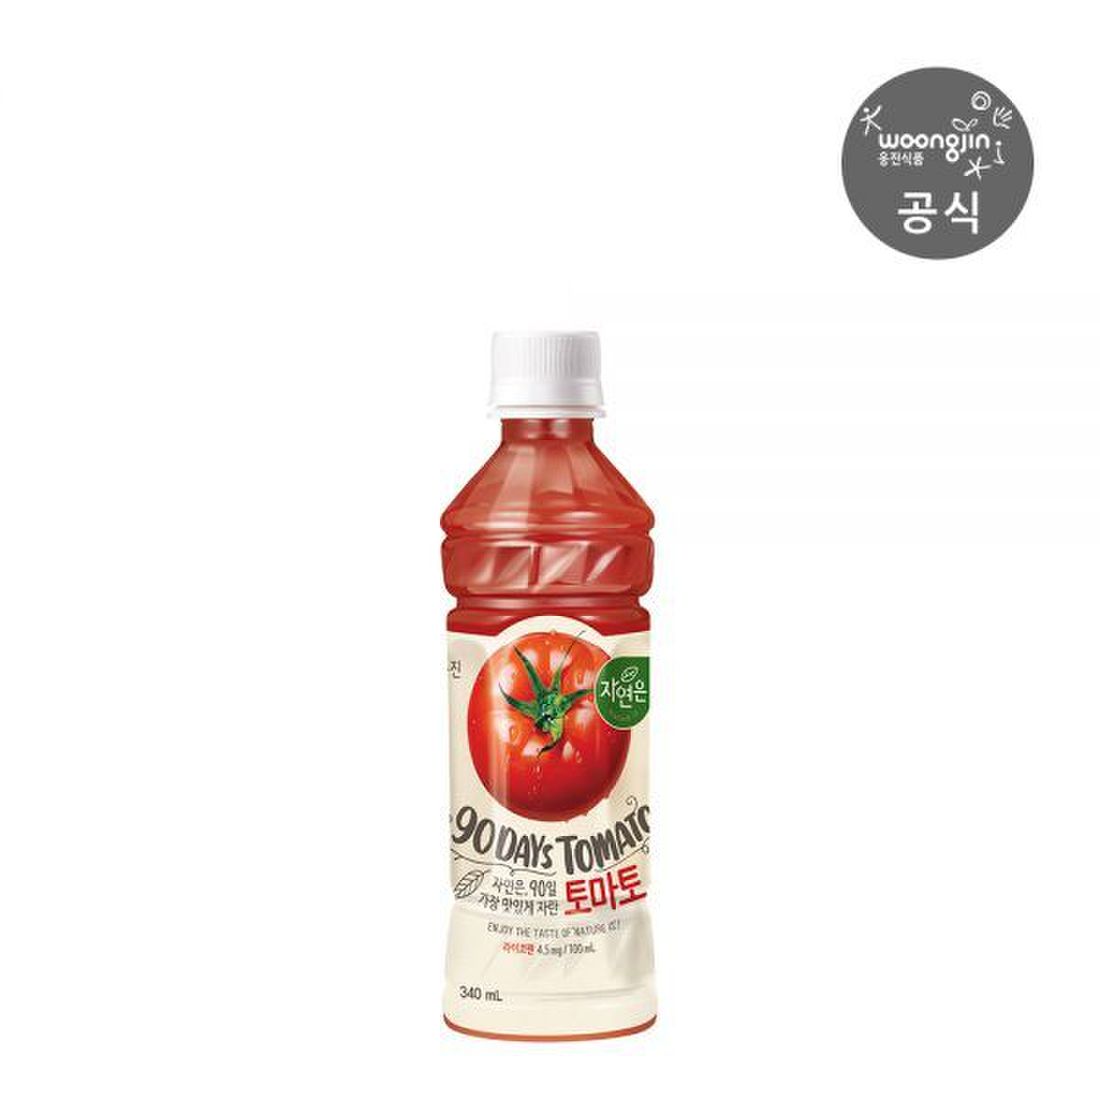 woongjin Tomato juice 자연은 토마토 340ml